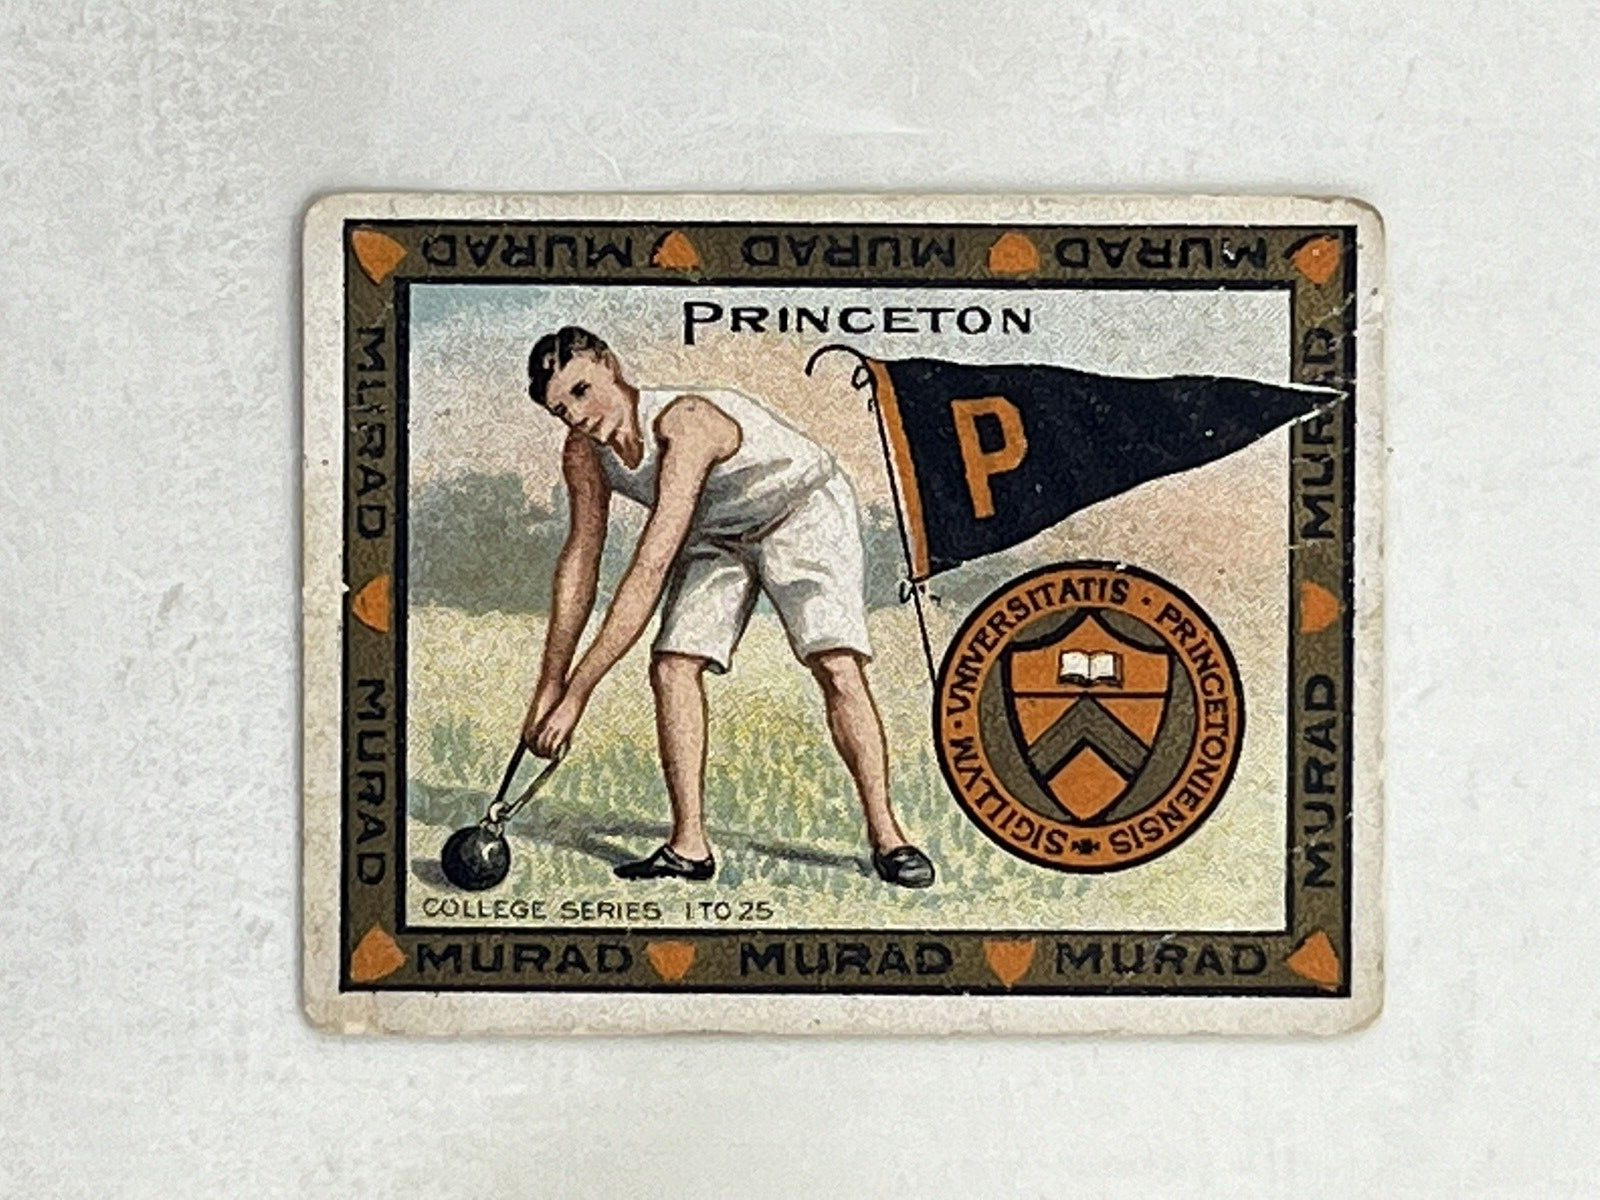 Princeton 1910 Murad Cigarettes College Series T51 Vintage Mini Trading Card